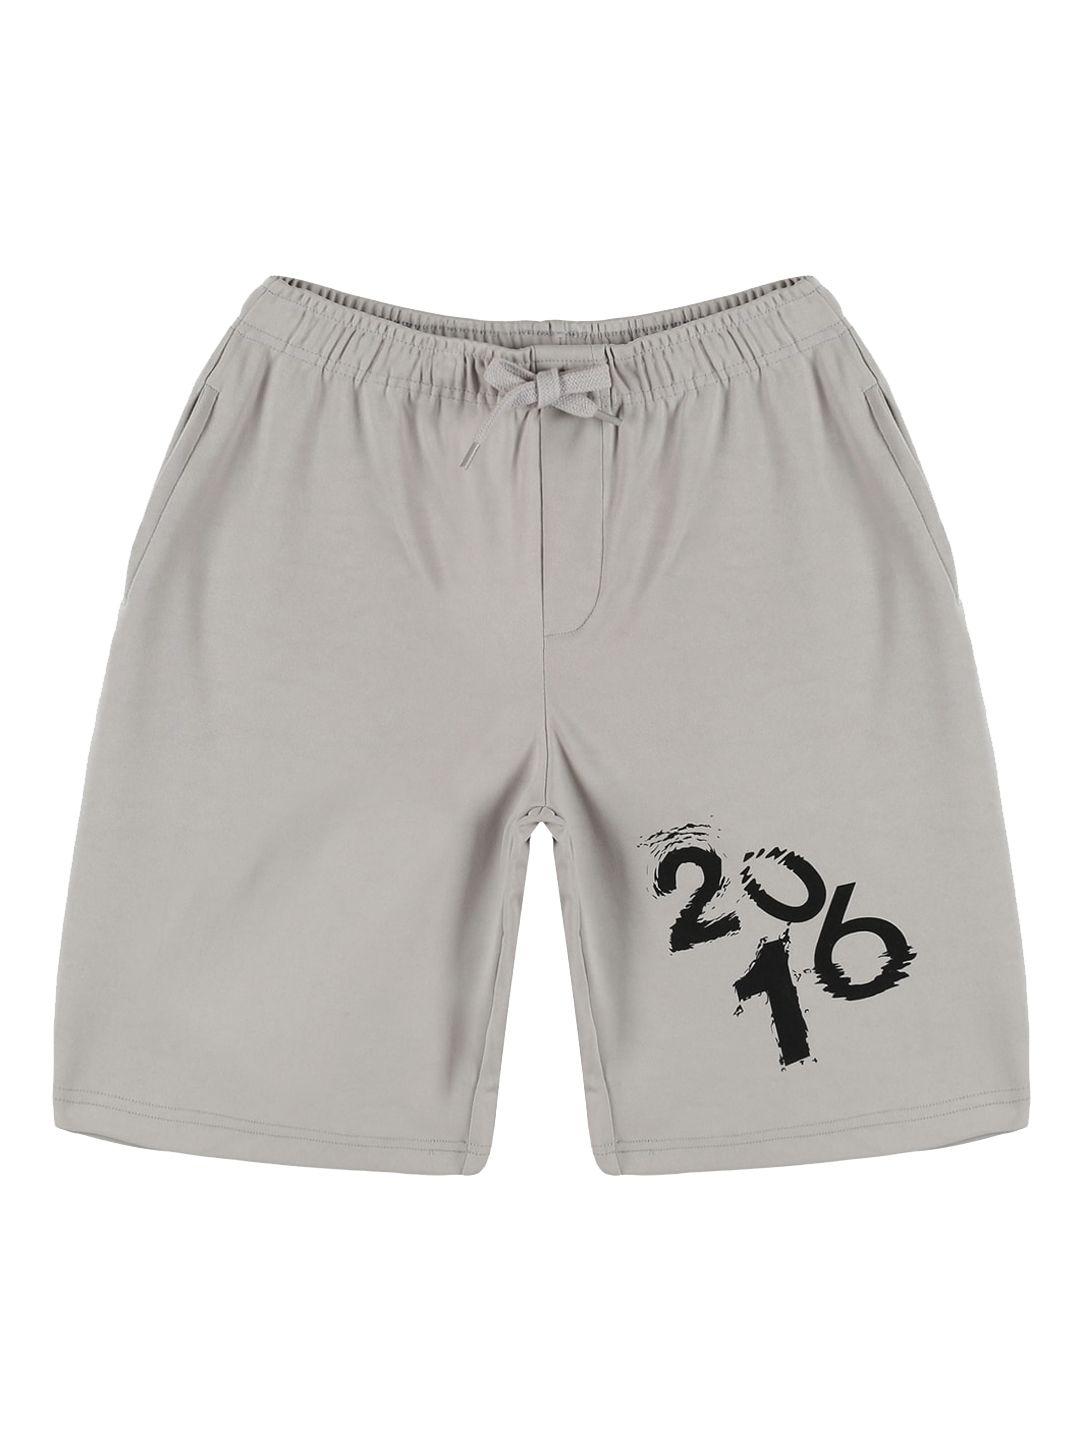 kiddopanti-boys-printed-mid-rise-swimming-shorts